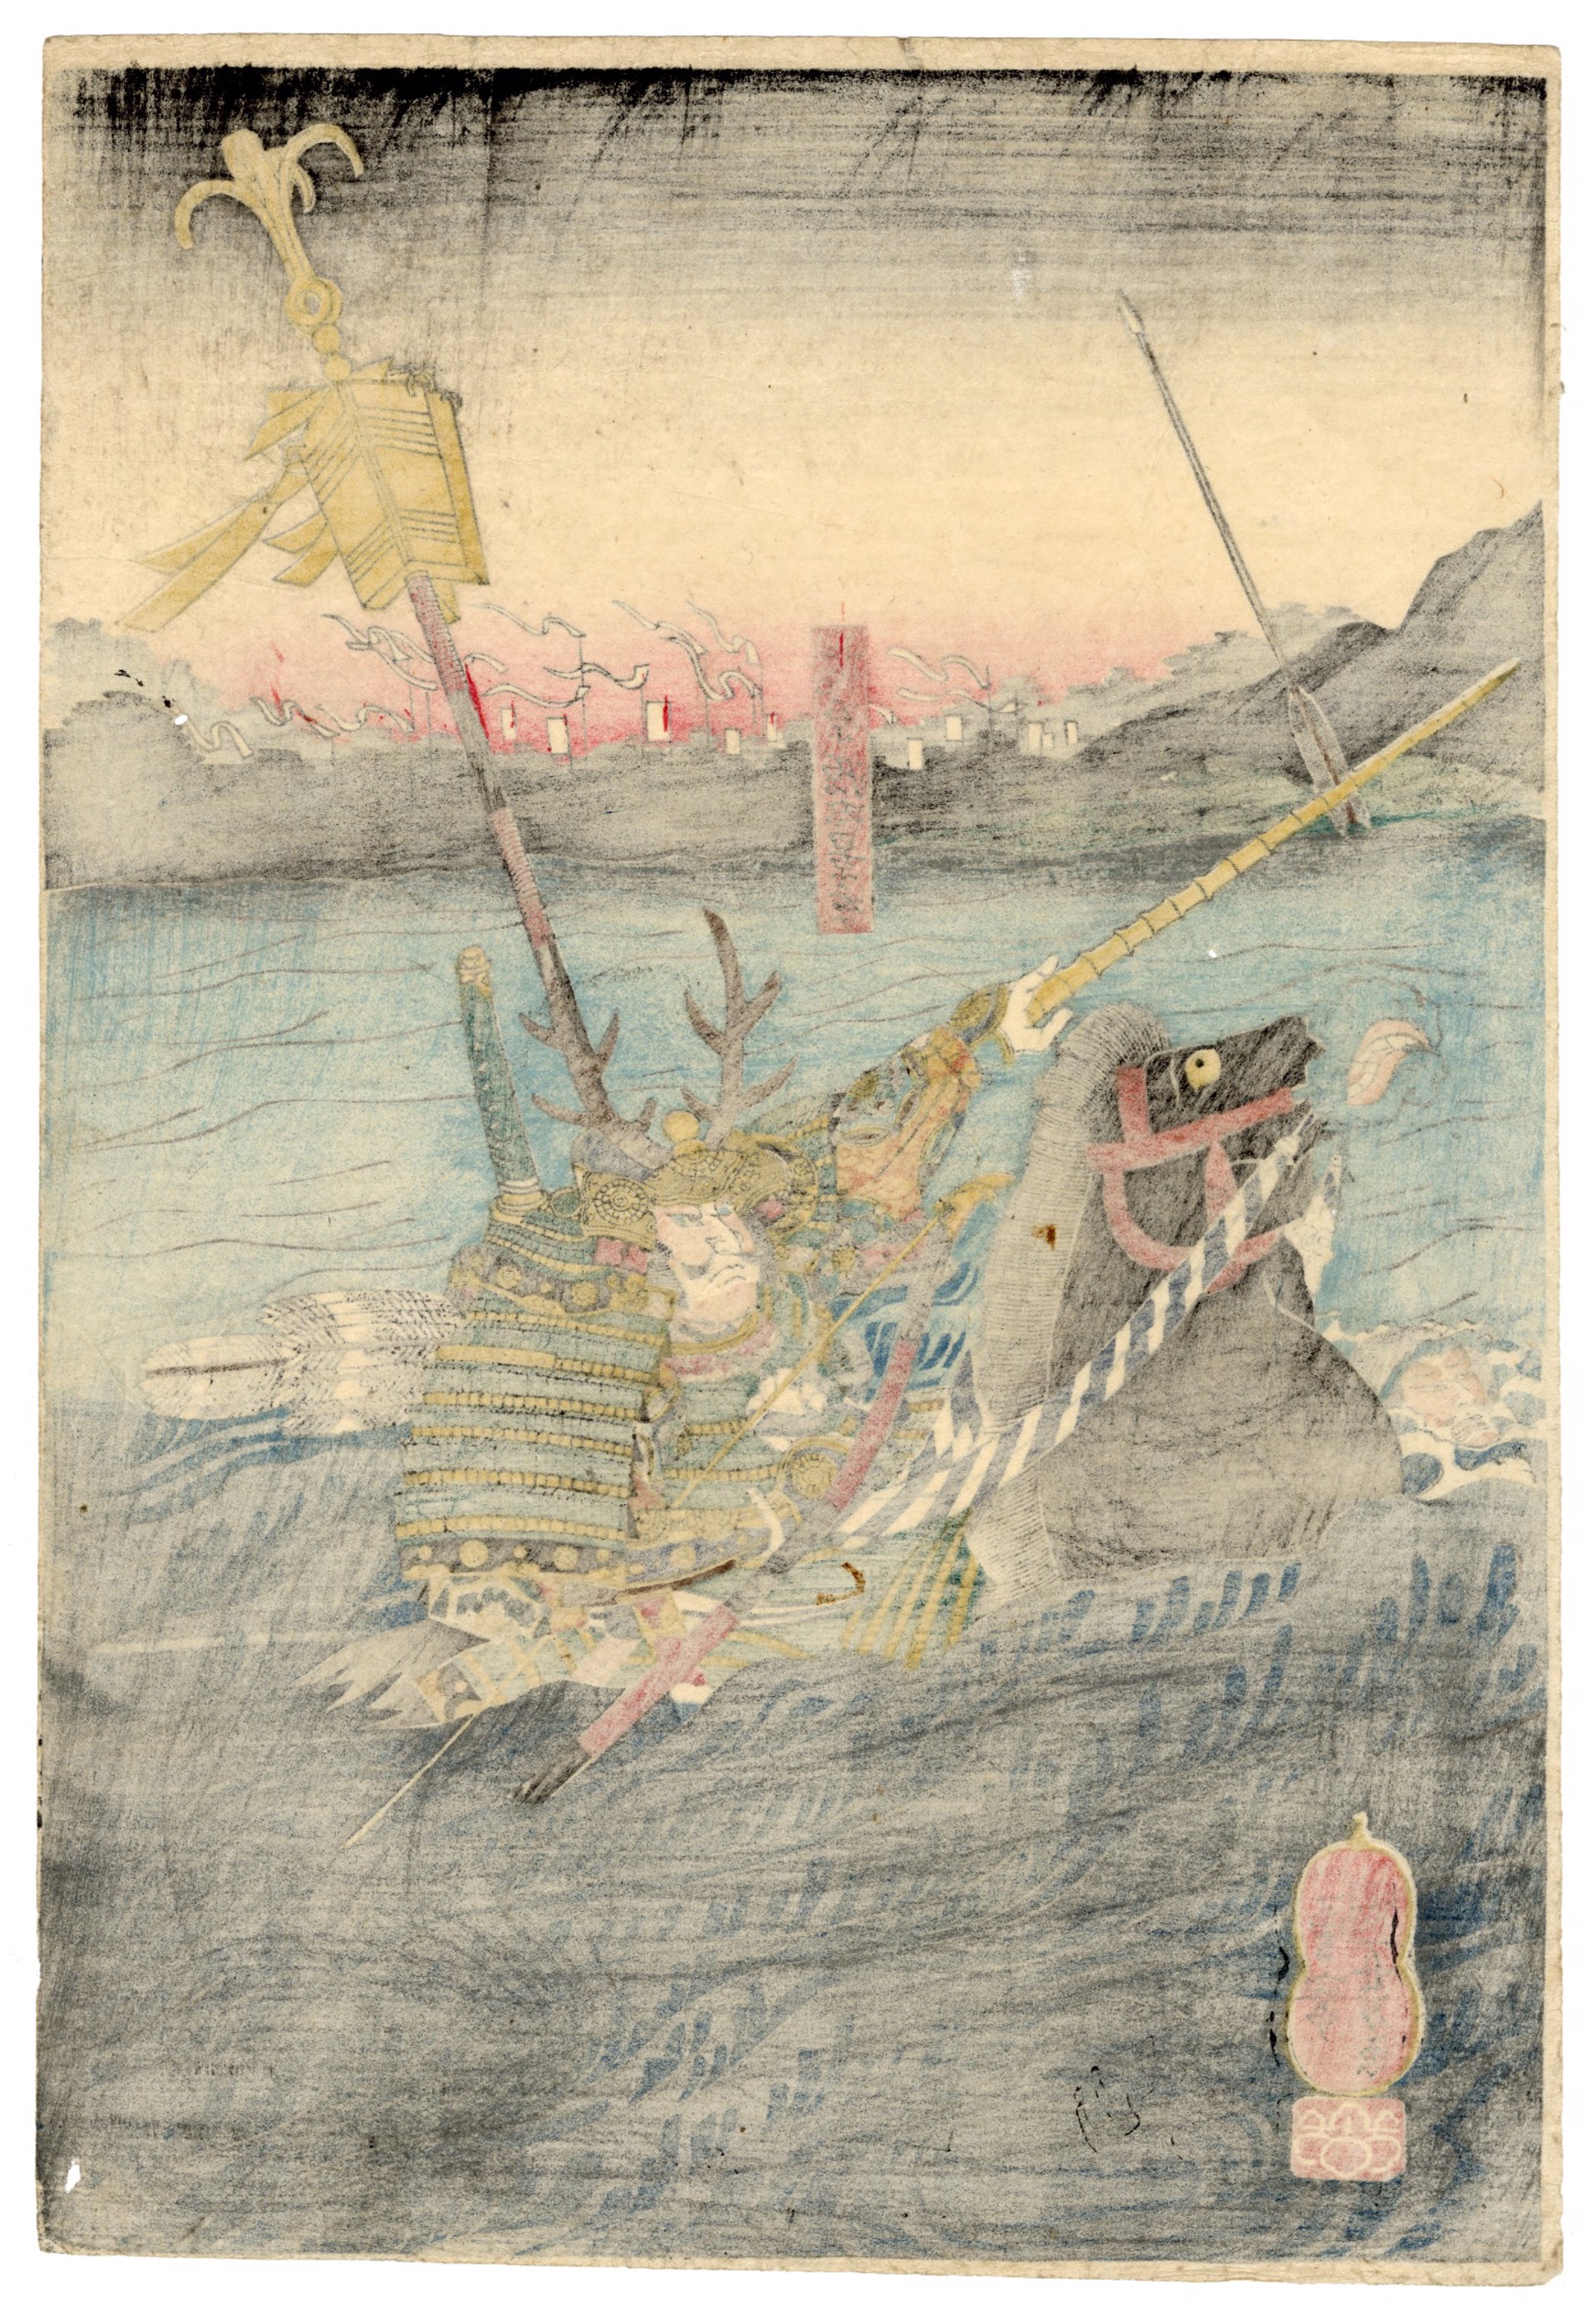 The Battle of the Uji River by Kuniyoshi